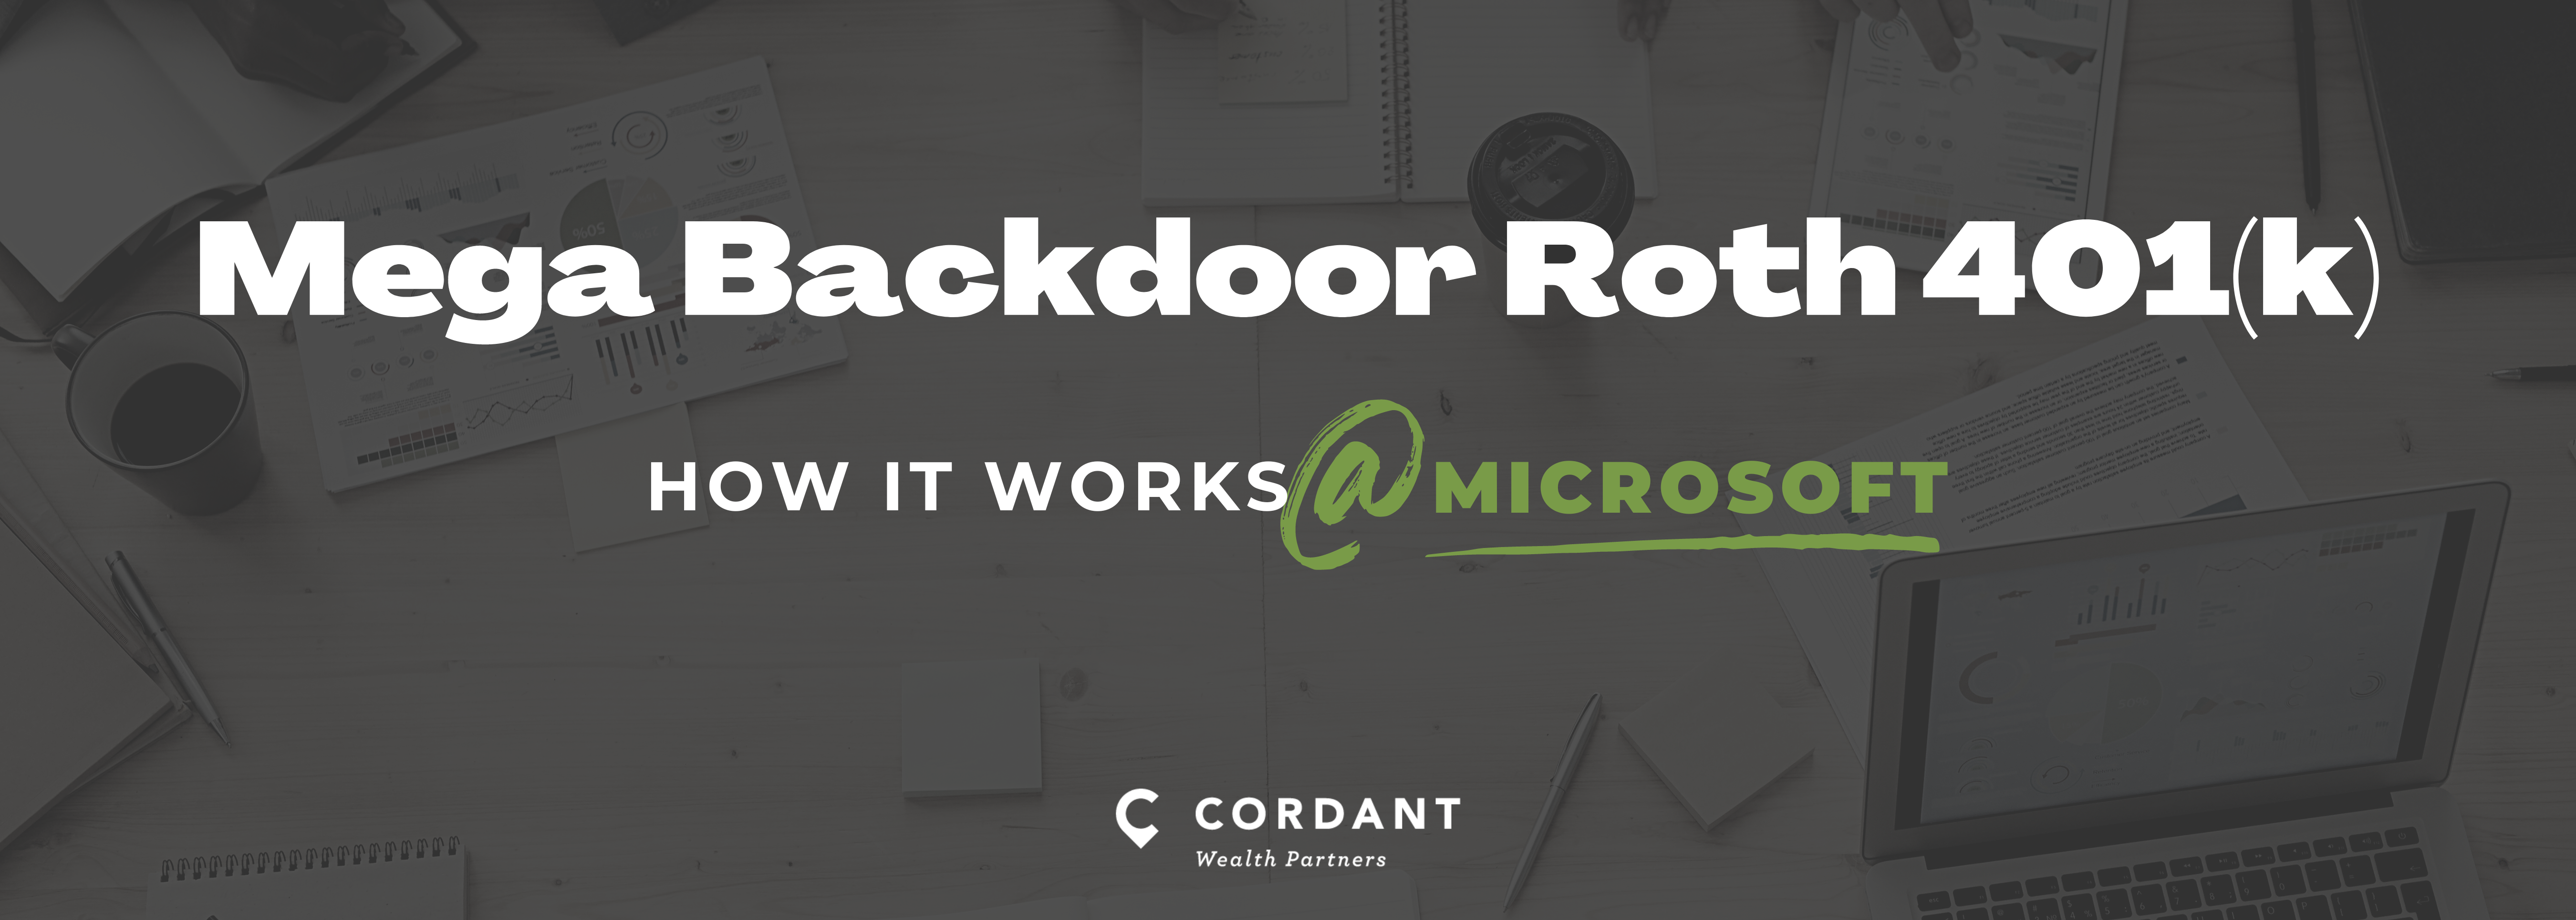 Microsoft Mega Backdoor Roth 401k: How it Works